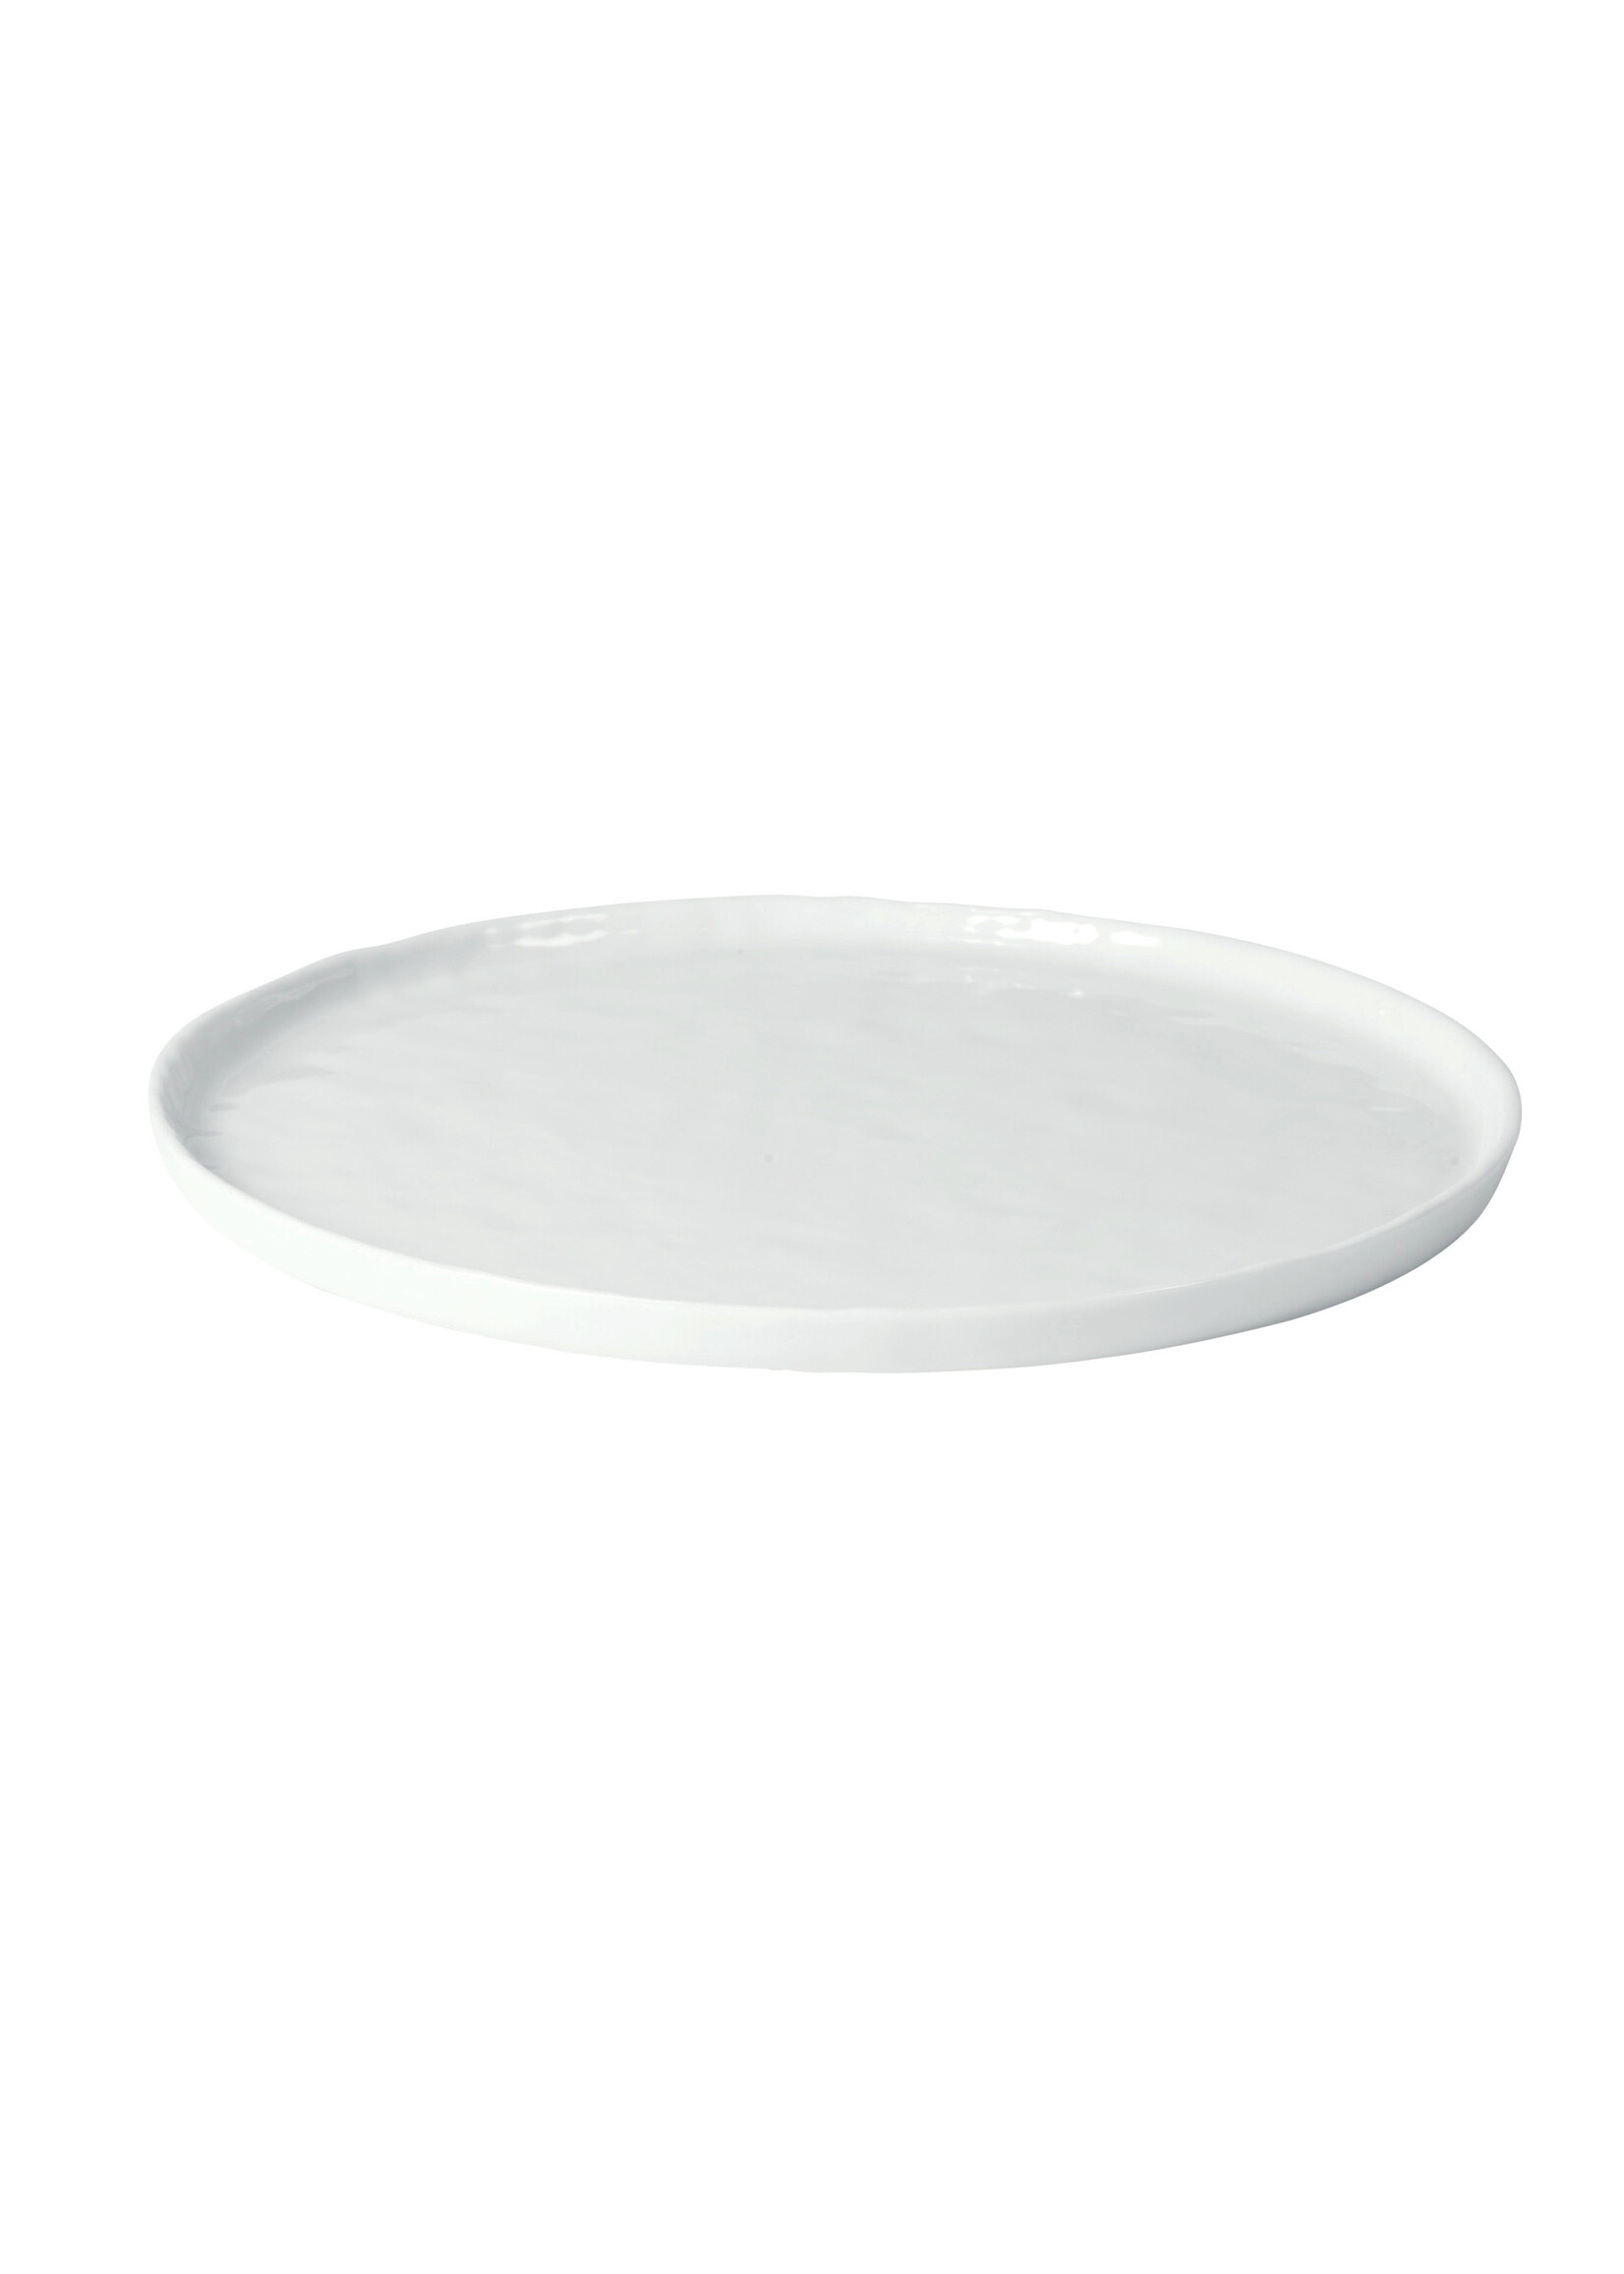 Pomax Porcelino White Assiette Plate 27 cm